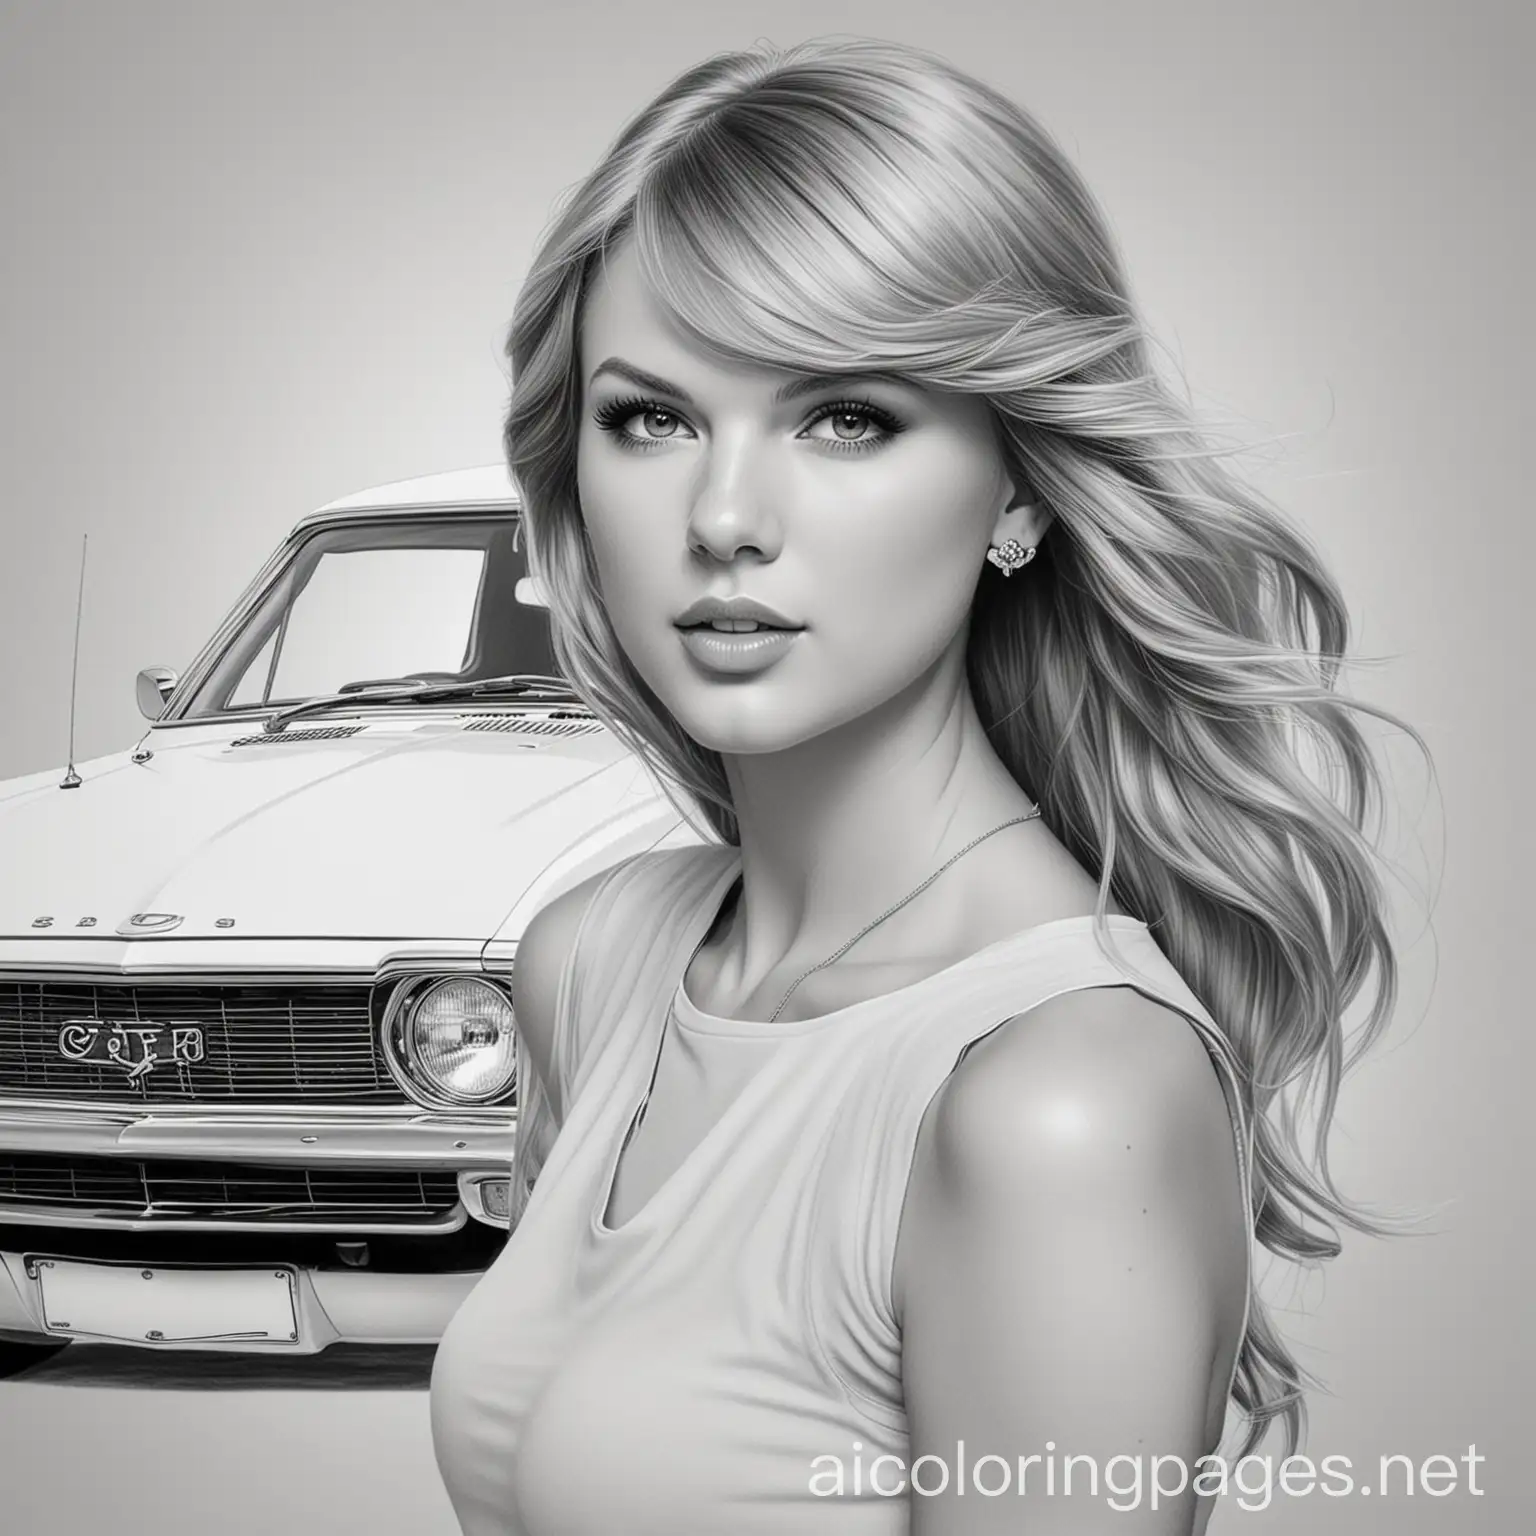 Taylor-Swift-Line-Art-with-Mic-near-Car